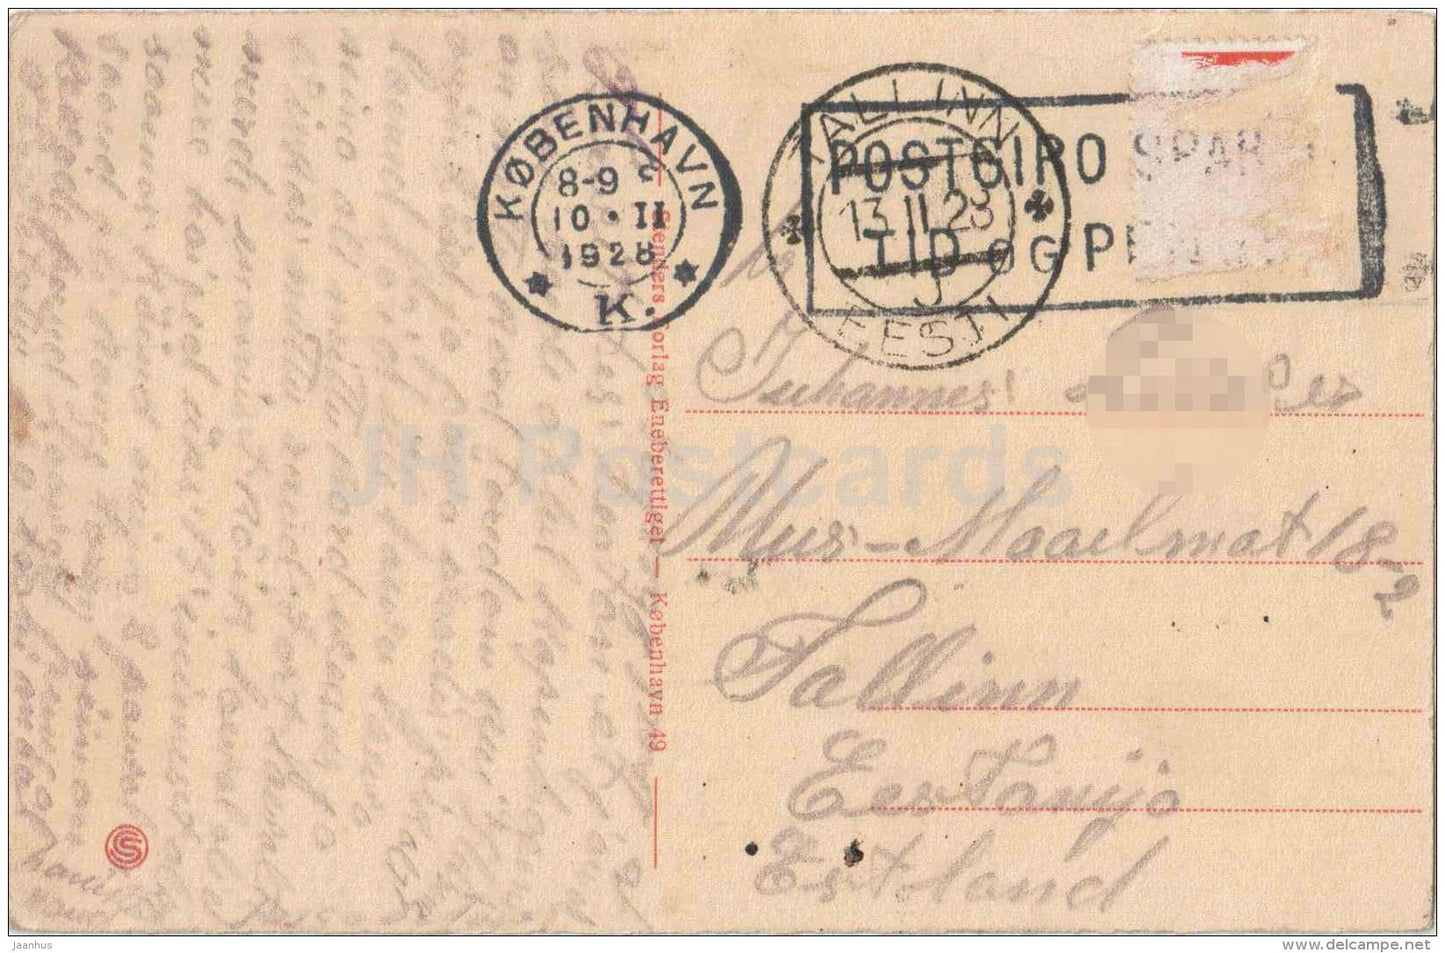 Gefionspringvandel - Kobenhavn - Copenhagen - Denmark - old postcard - sent from Denmark Copenhagen to Estonia 1928 - JH Postcards